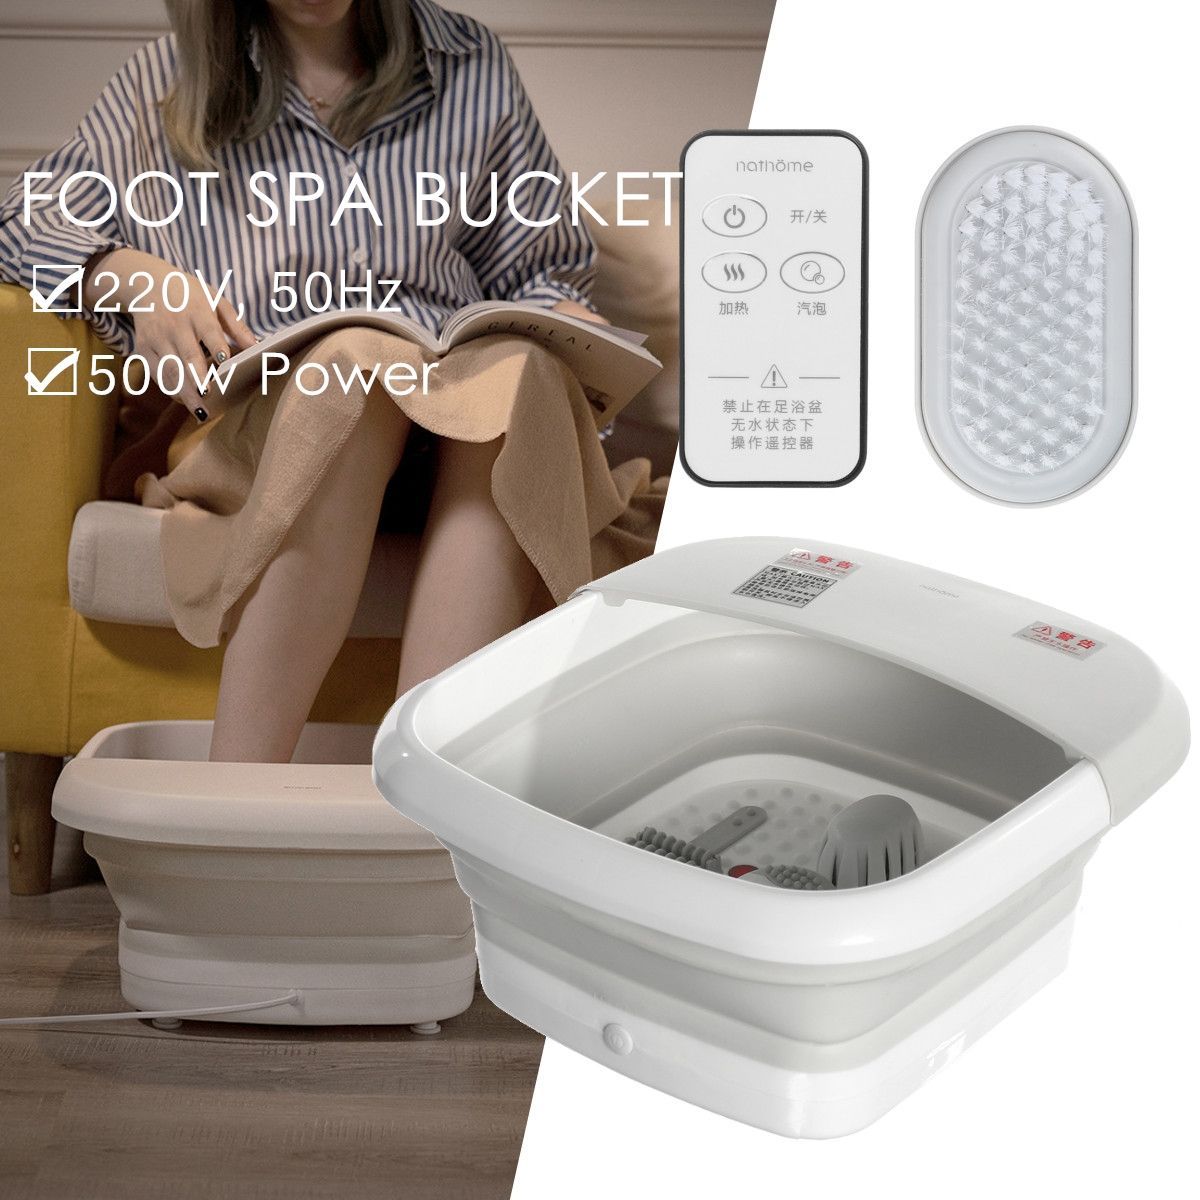 220V-500W-Folding-Foot-Tub-Spa-Therapeutic-Relax-Bubble-Bath-Massage-Rollers-Remote-Control-Constant-1600486